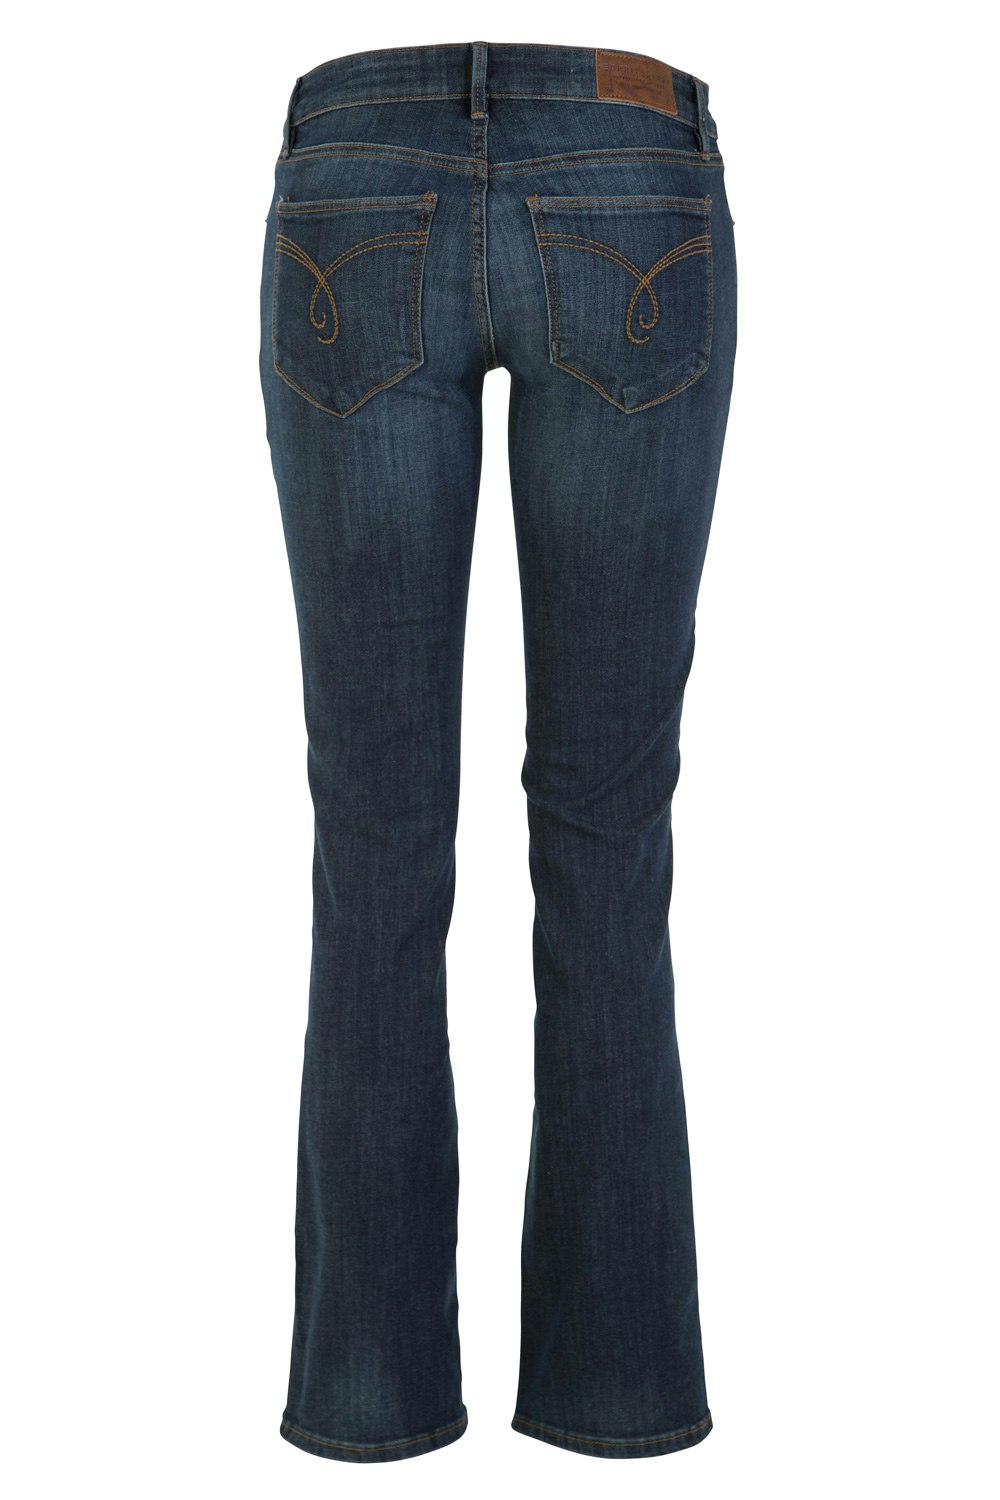 Esprit clothing Cary Denim Bootcut Jean - Womens Bootcut Jeans at Birdsnest